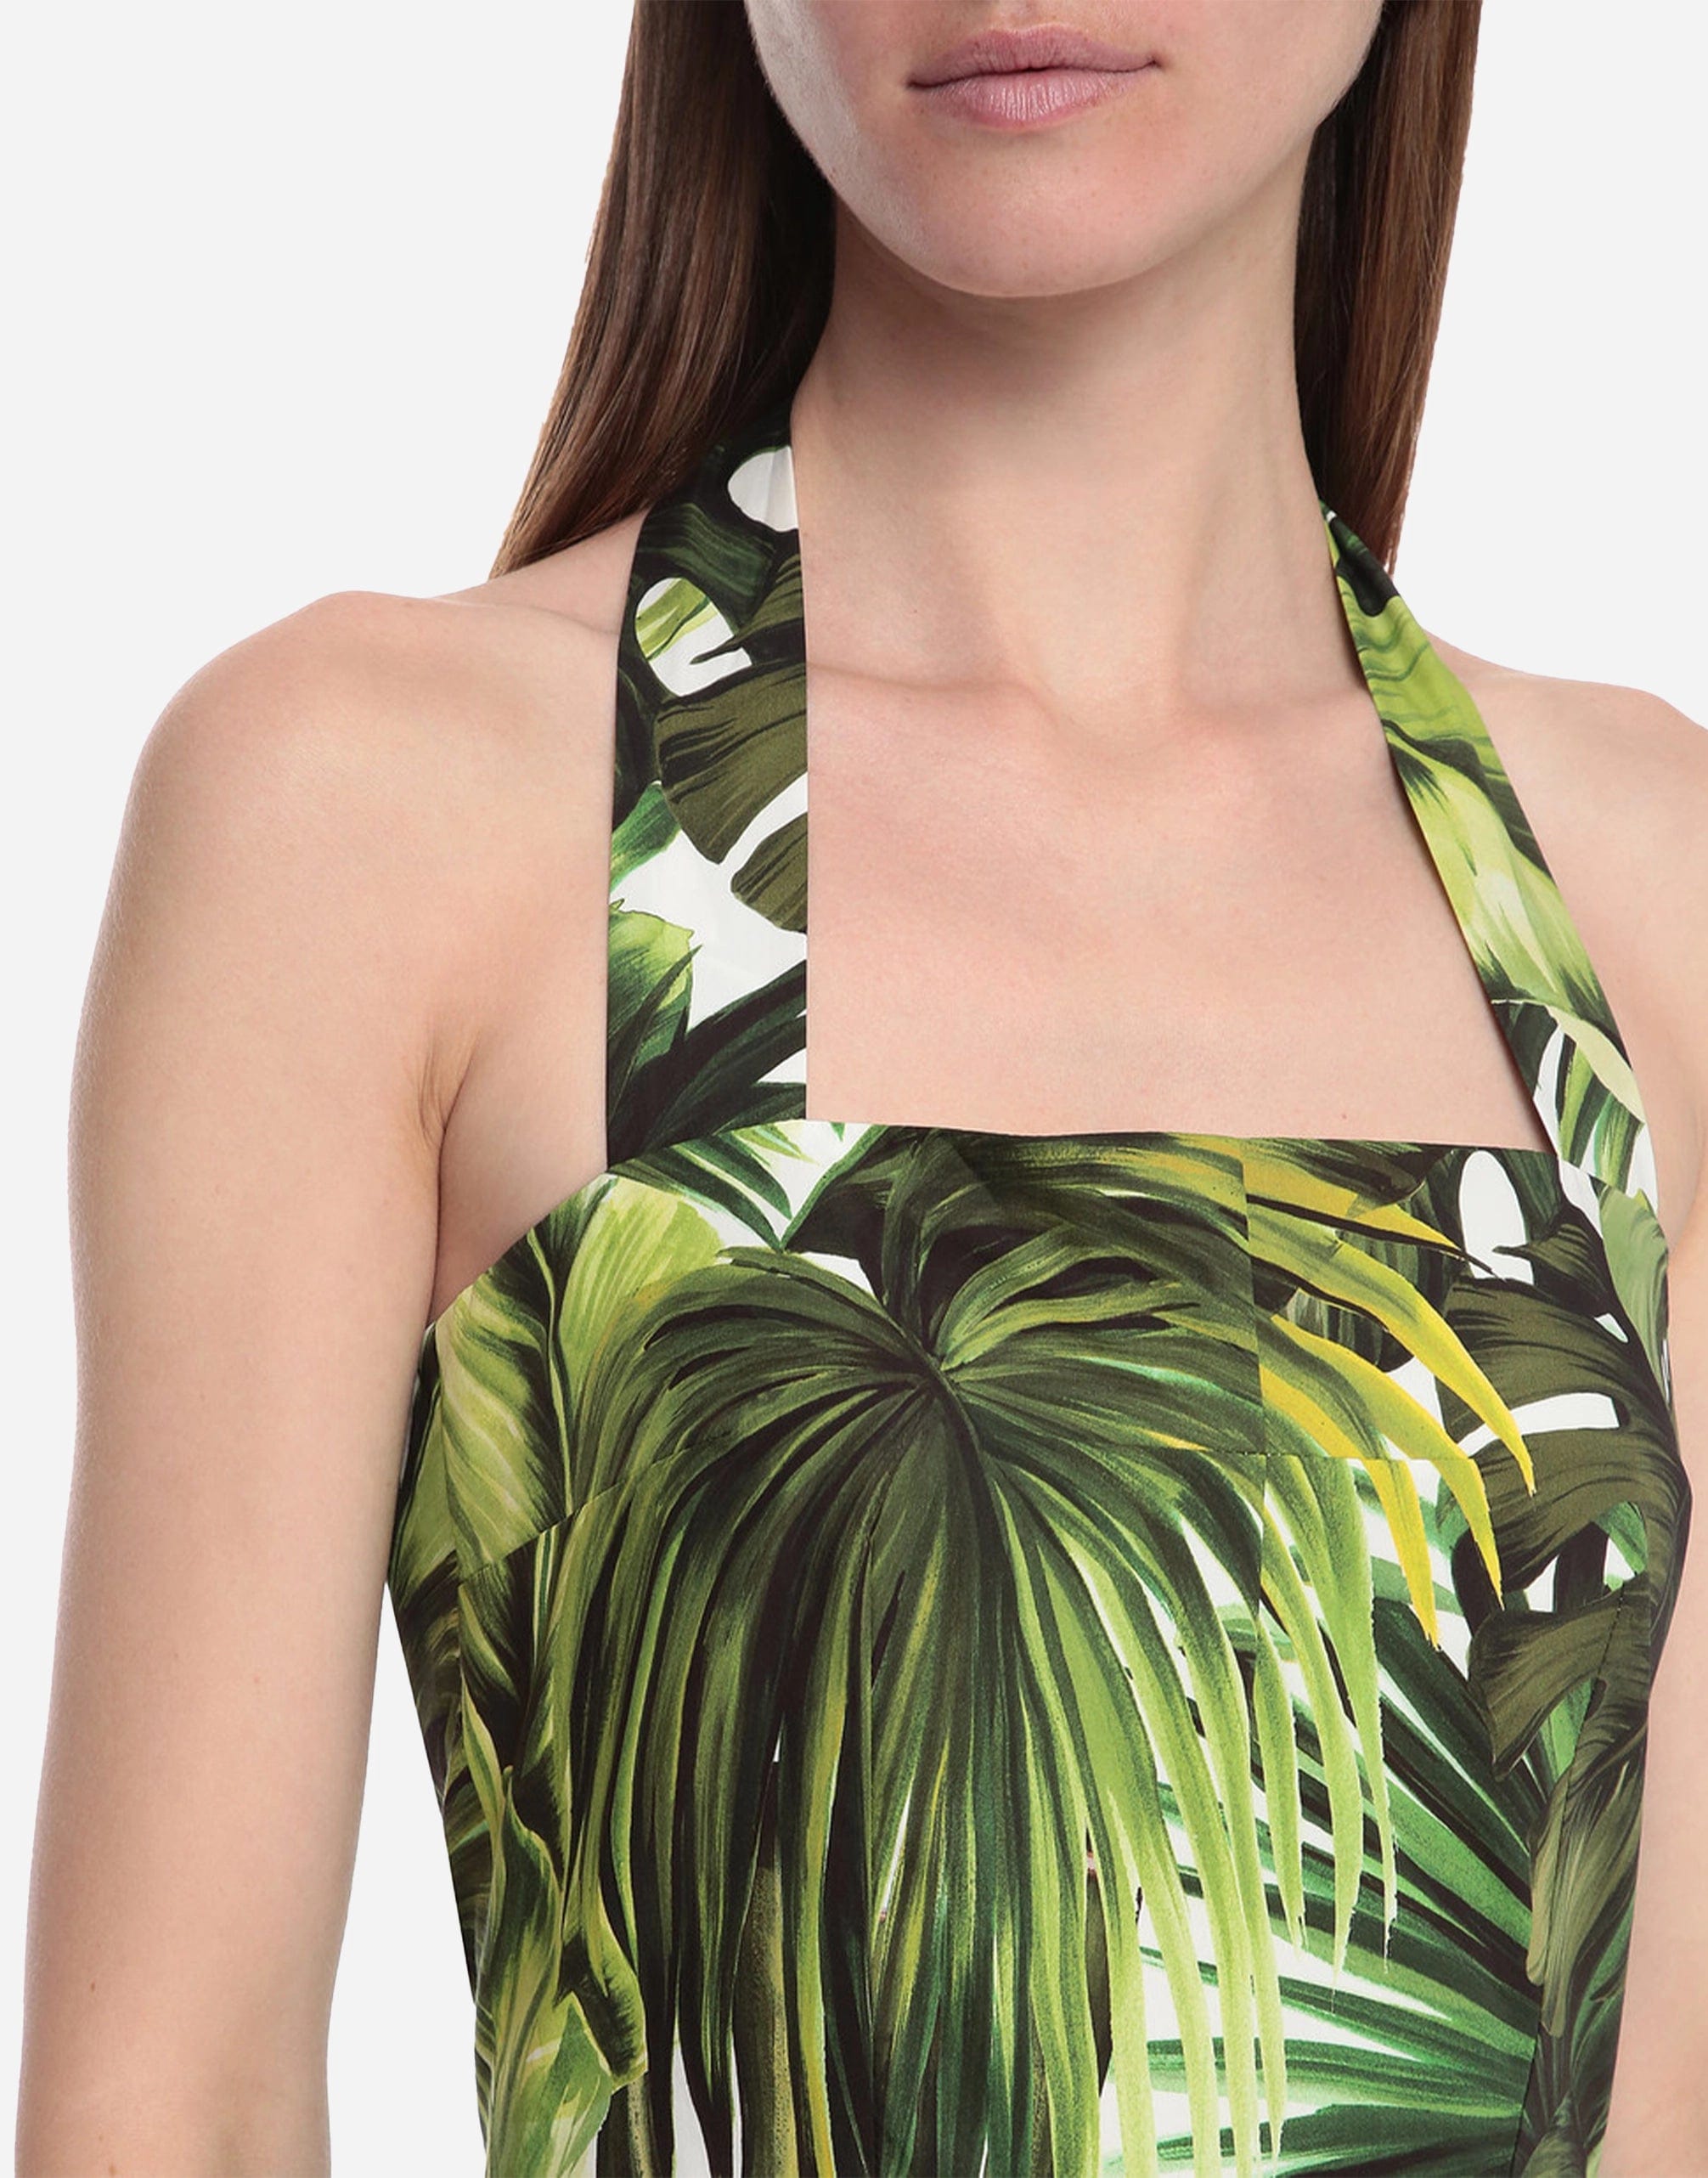 Dolce & Gabbana Jungle Print Halter Dress